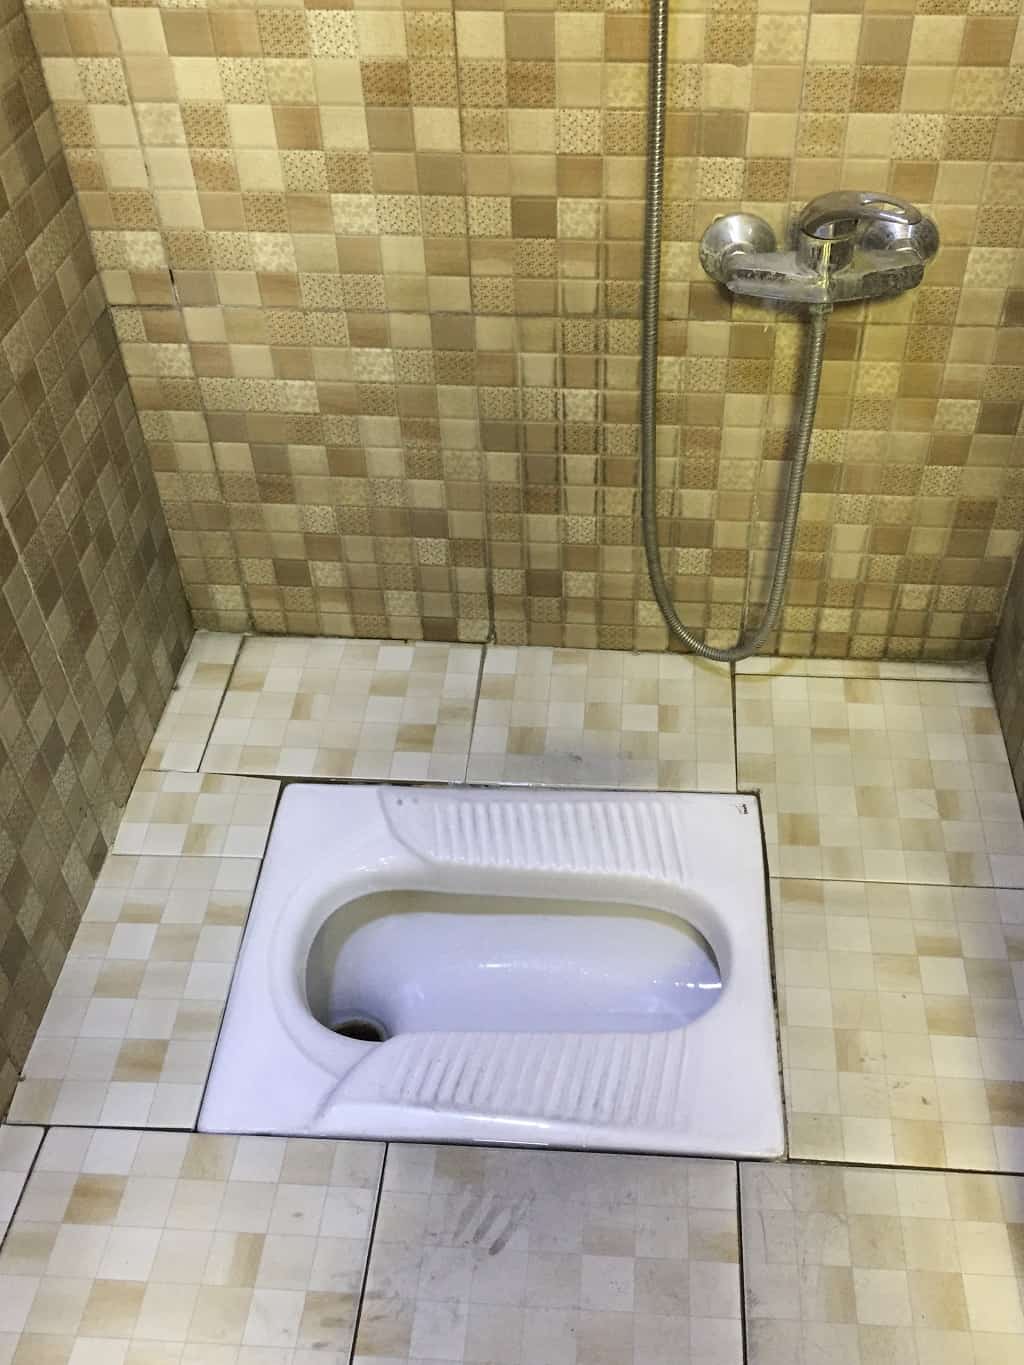 Photo of a squatty toilet